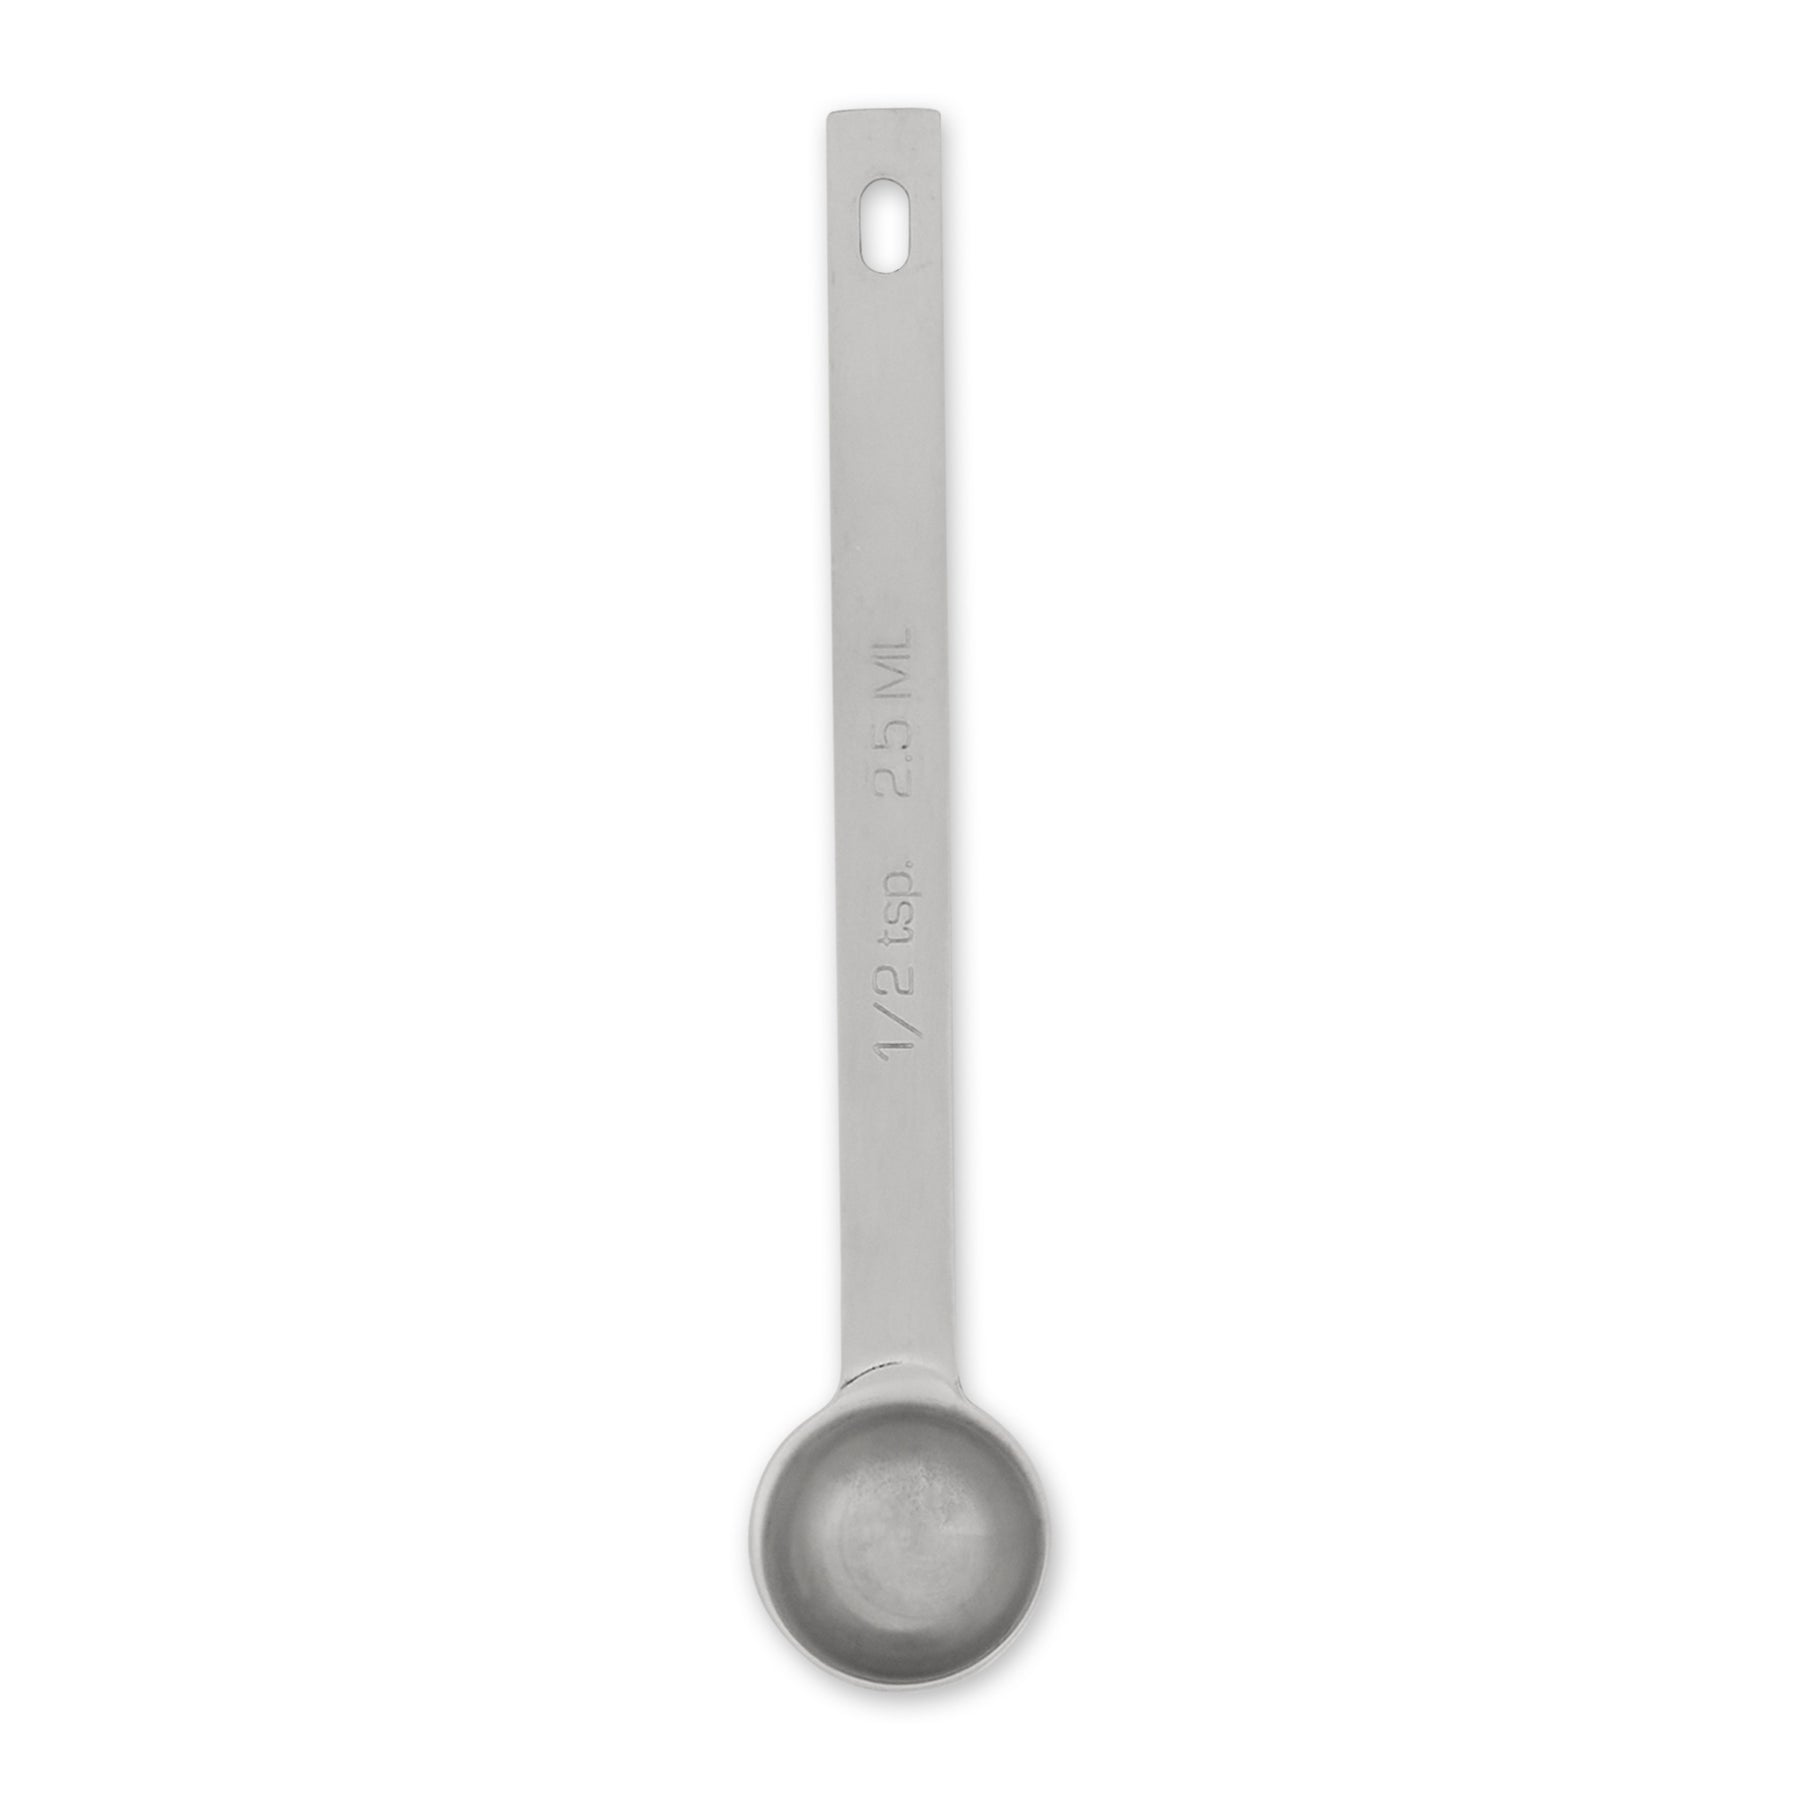 RSVP Individual Measuring Spoons